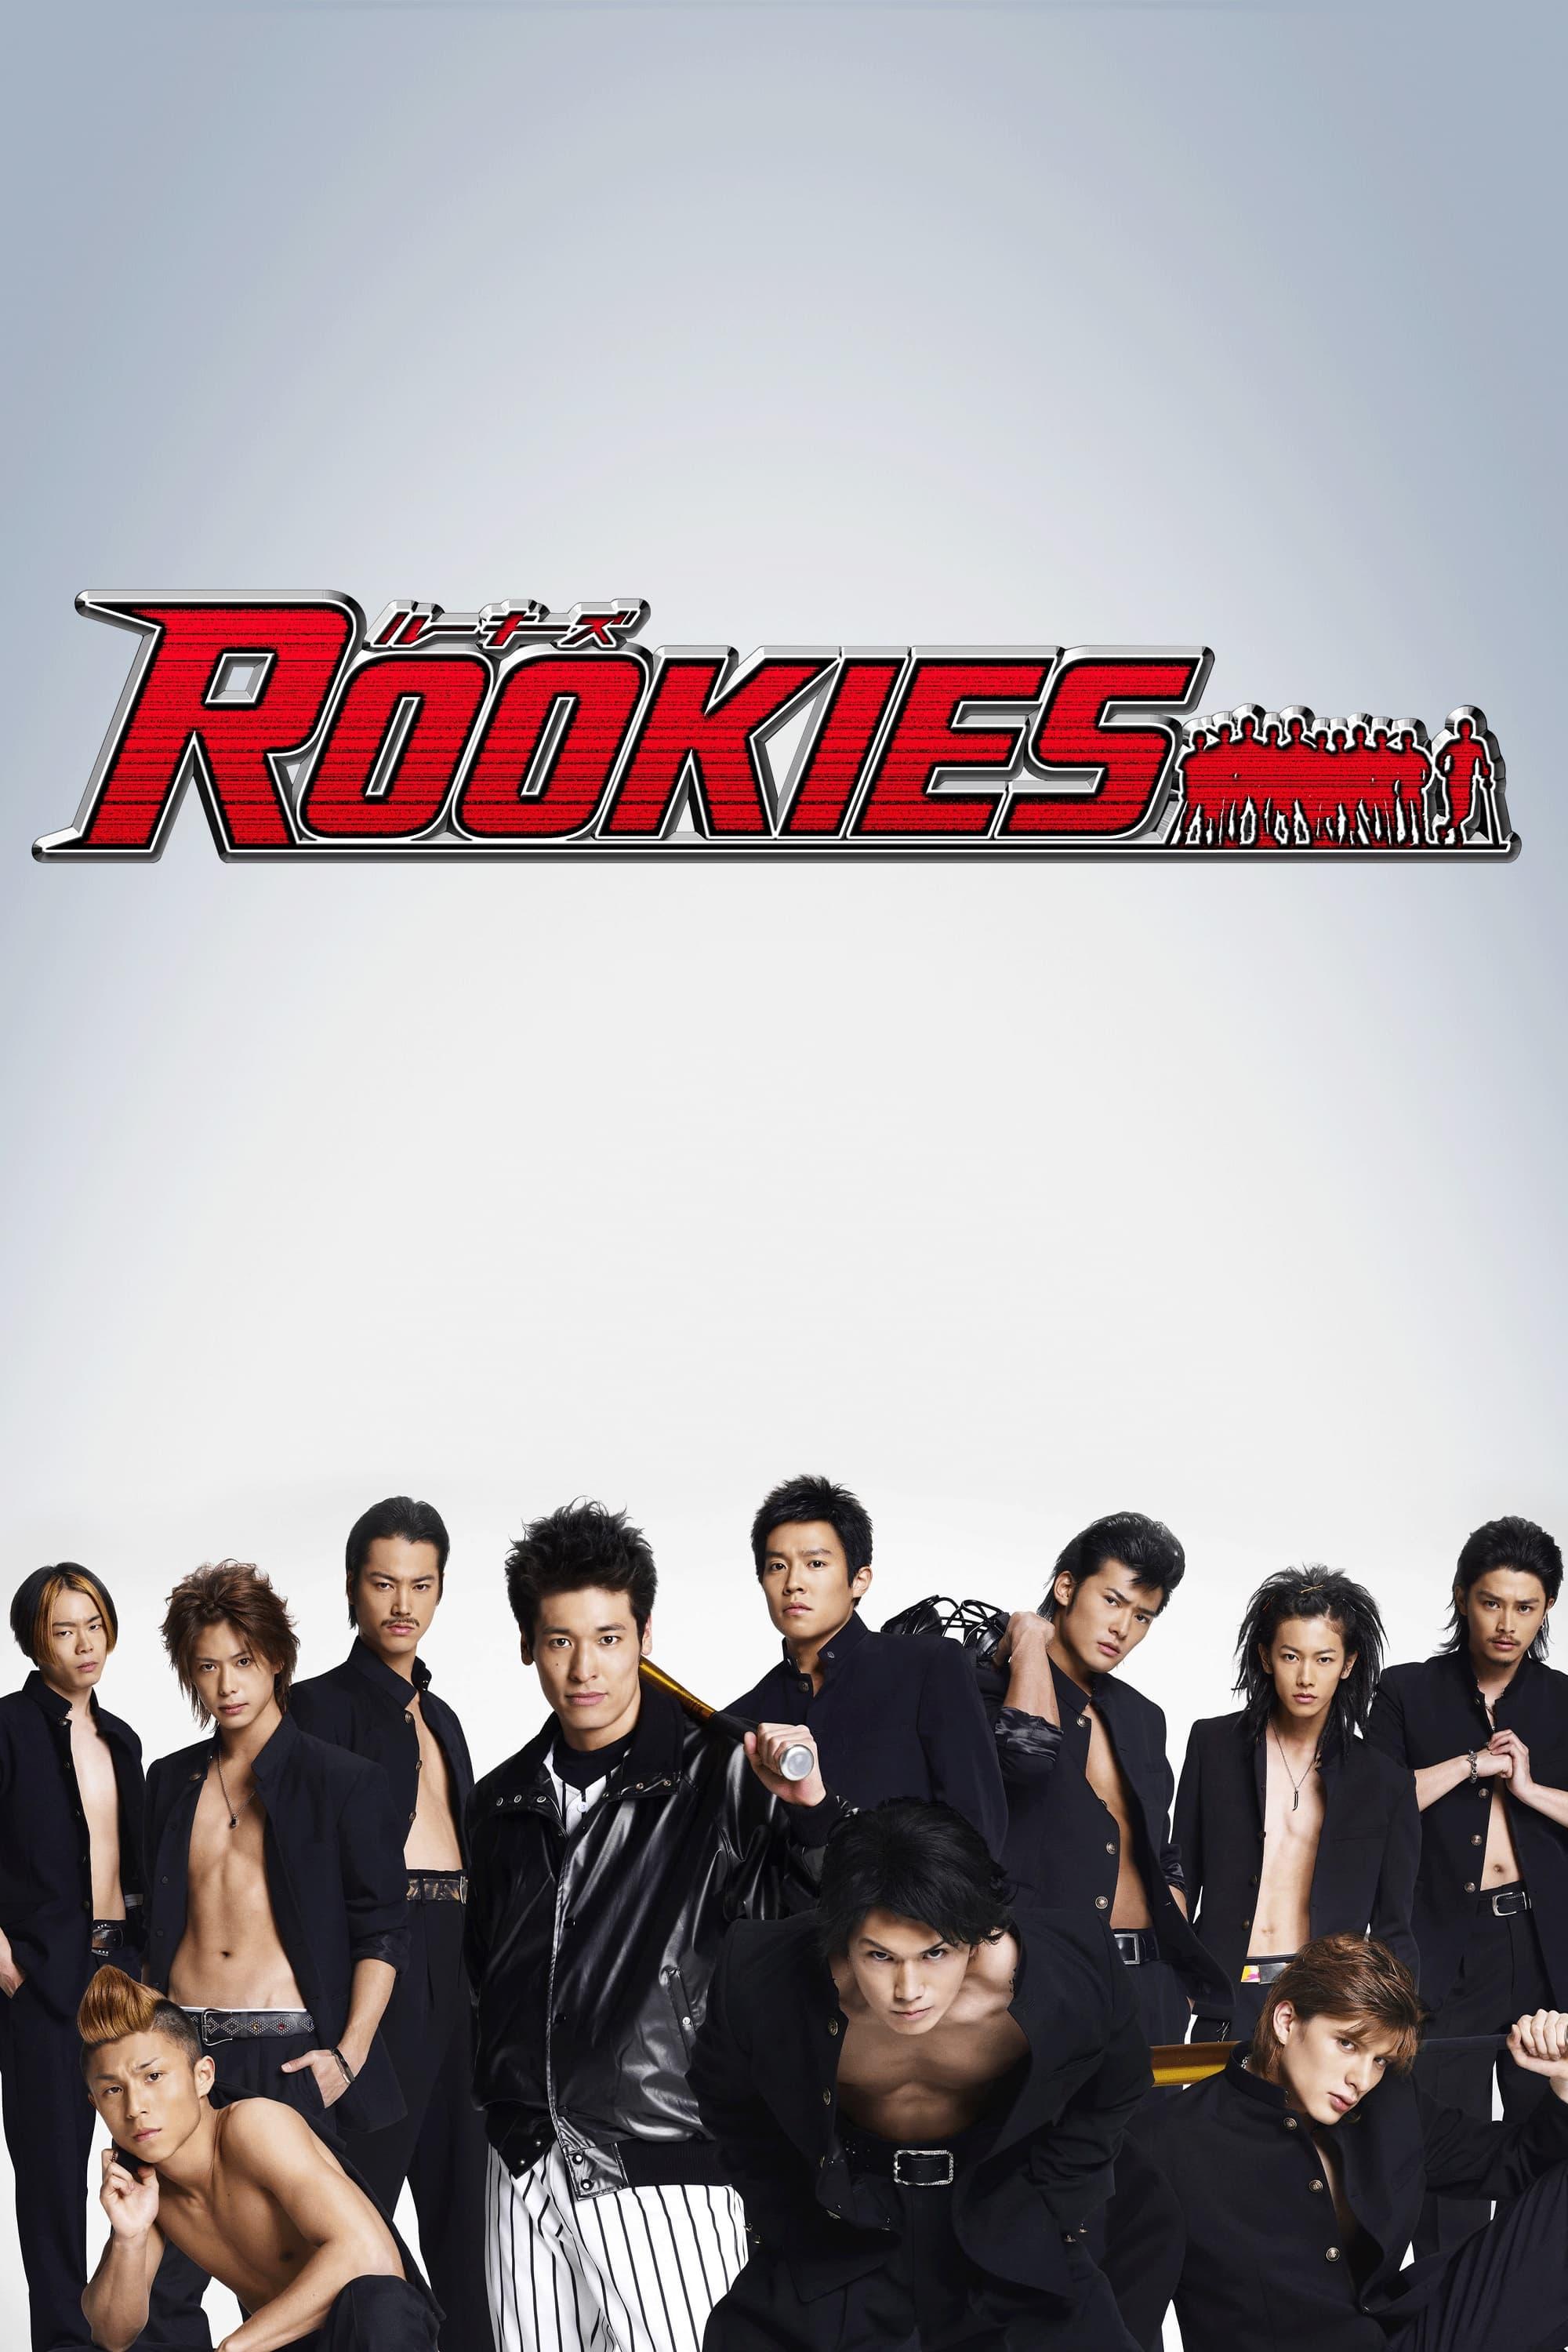 Rookies poster